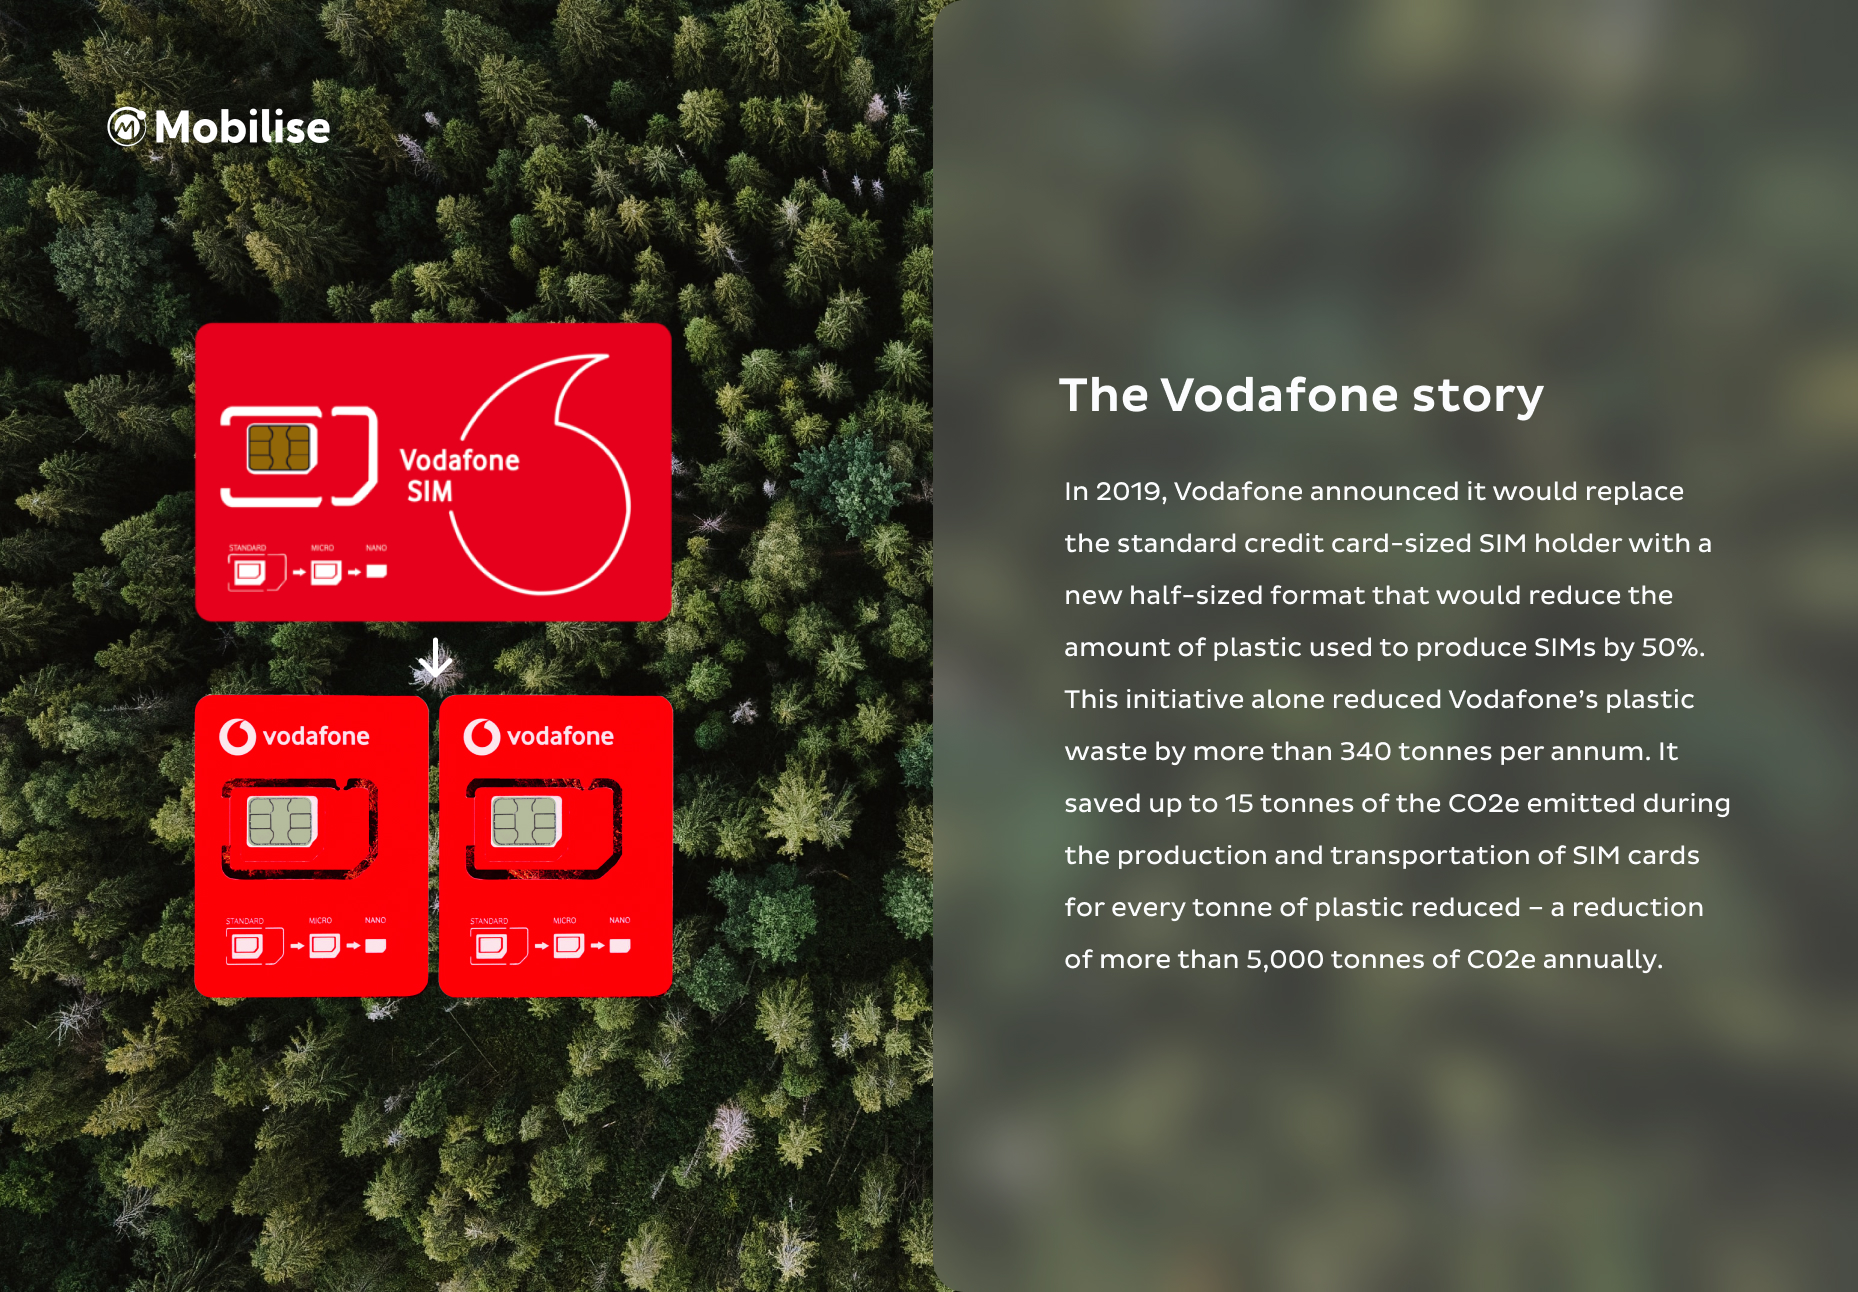 Image describing Vodafone's sustainability efforts